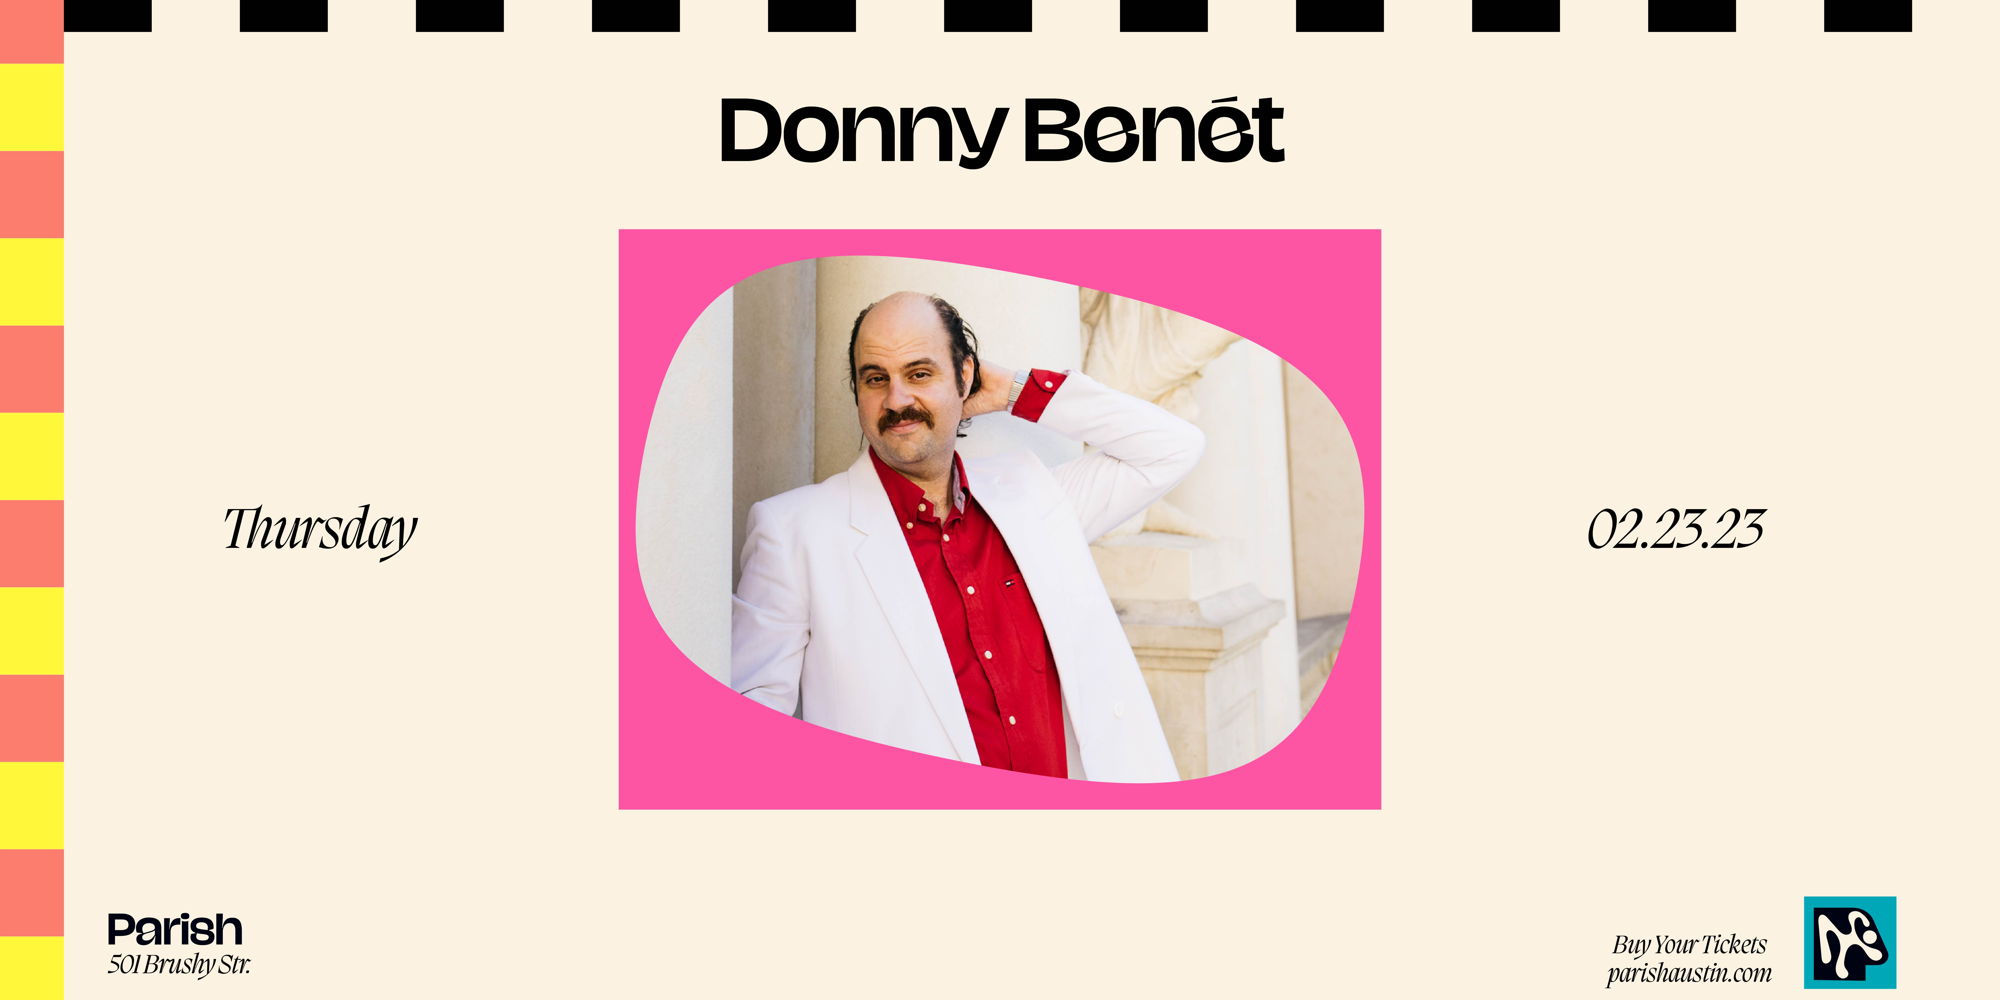 Resound Presents: Donny Benét at Parish -2/23/23 promotional image